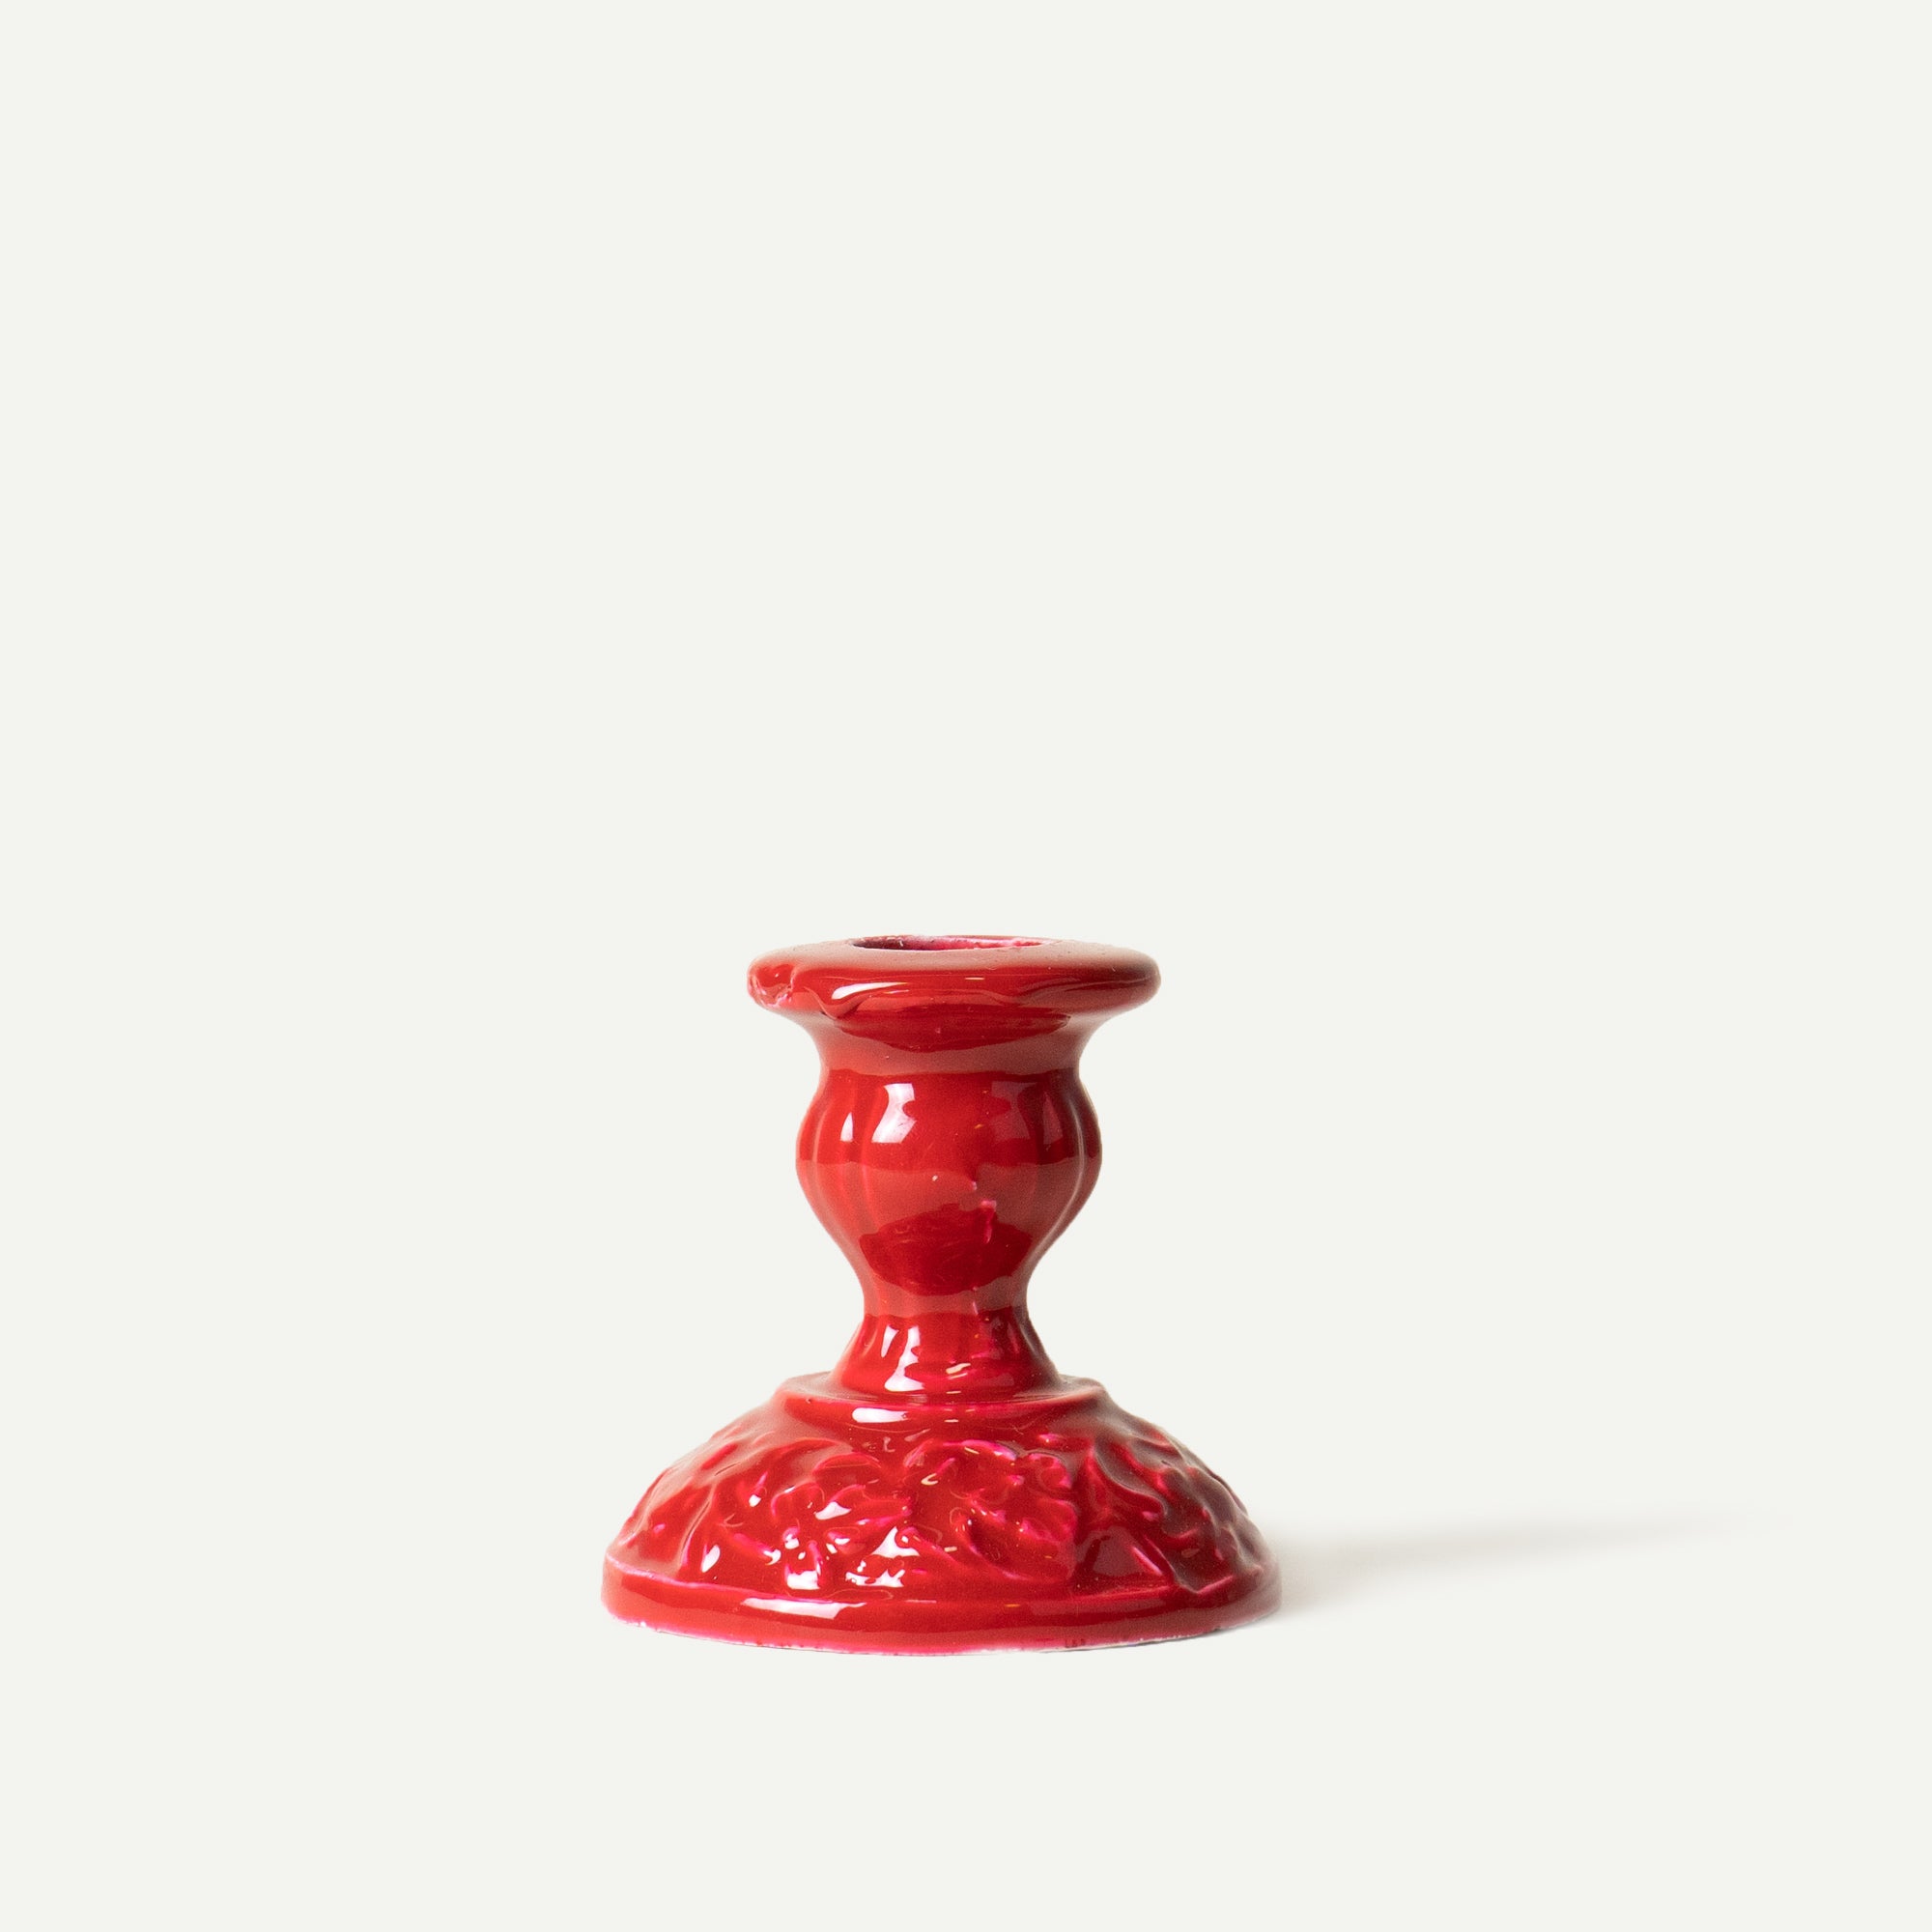 Snow Moulded Metal Red Ceramic Candleholder